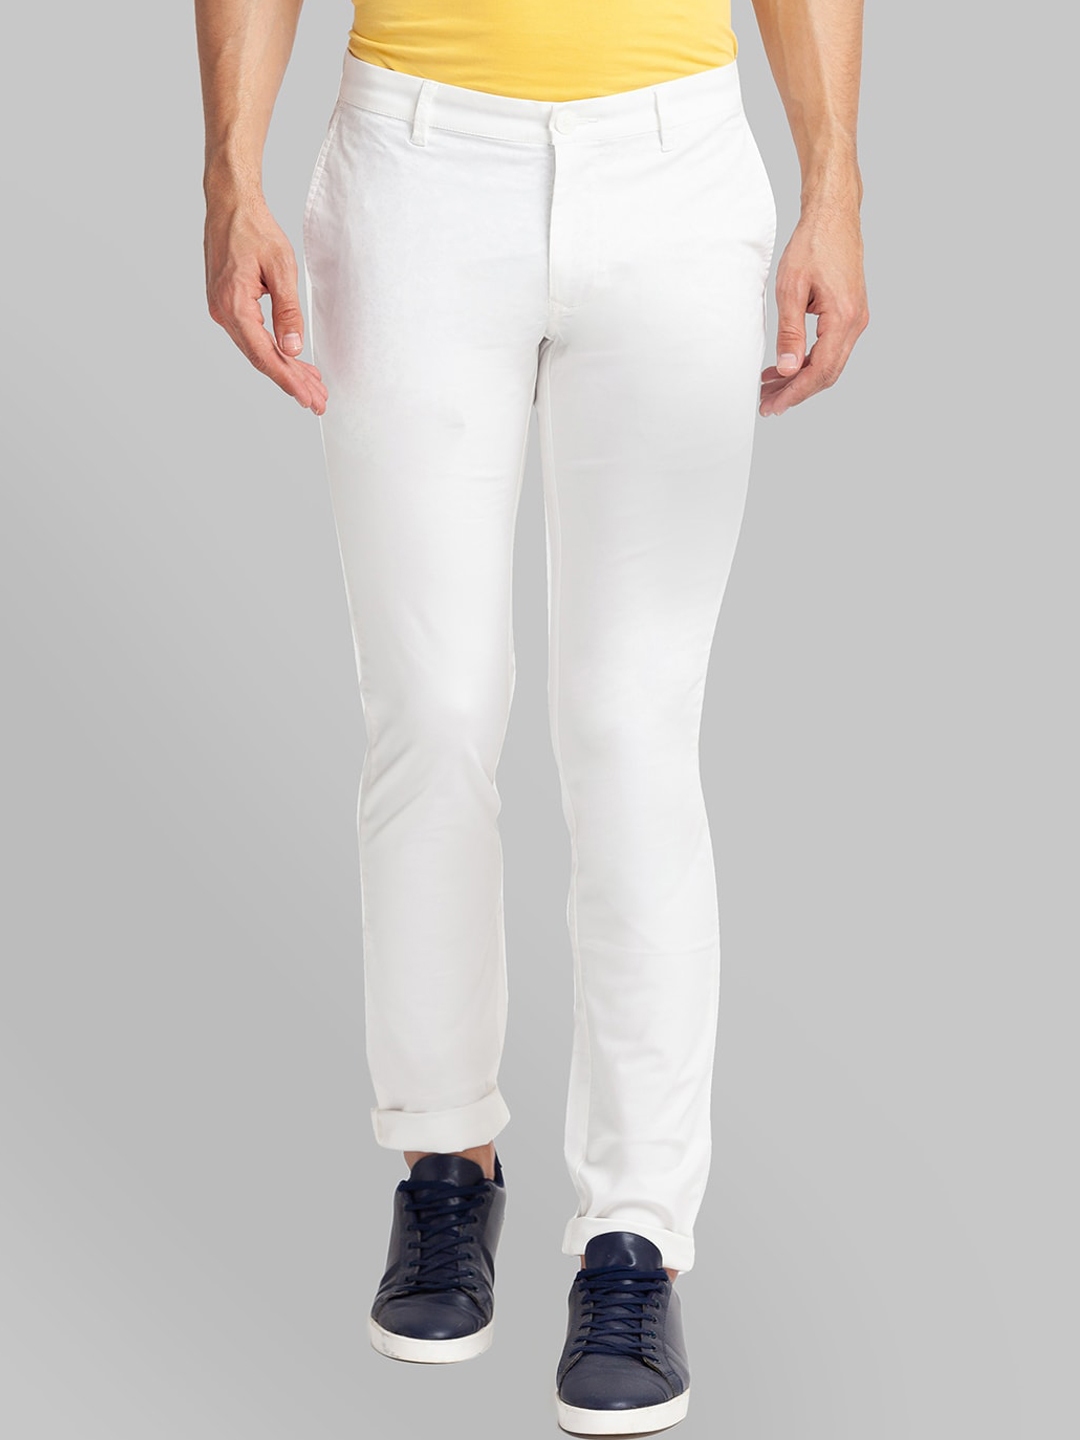 Buy Parx Men White Slim Fit Trousers - Trousers for Men 17018202 | Myntra